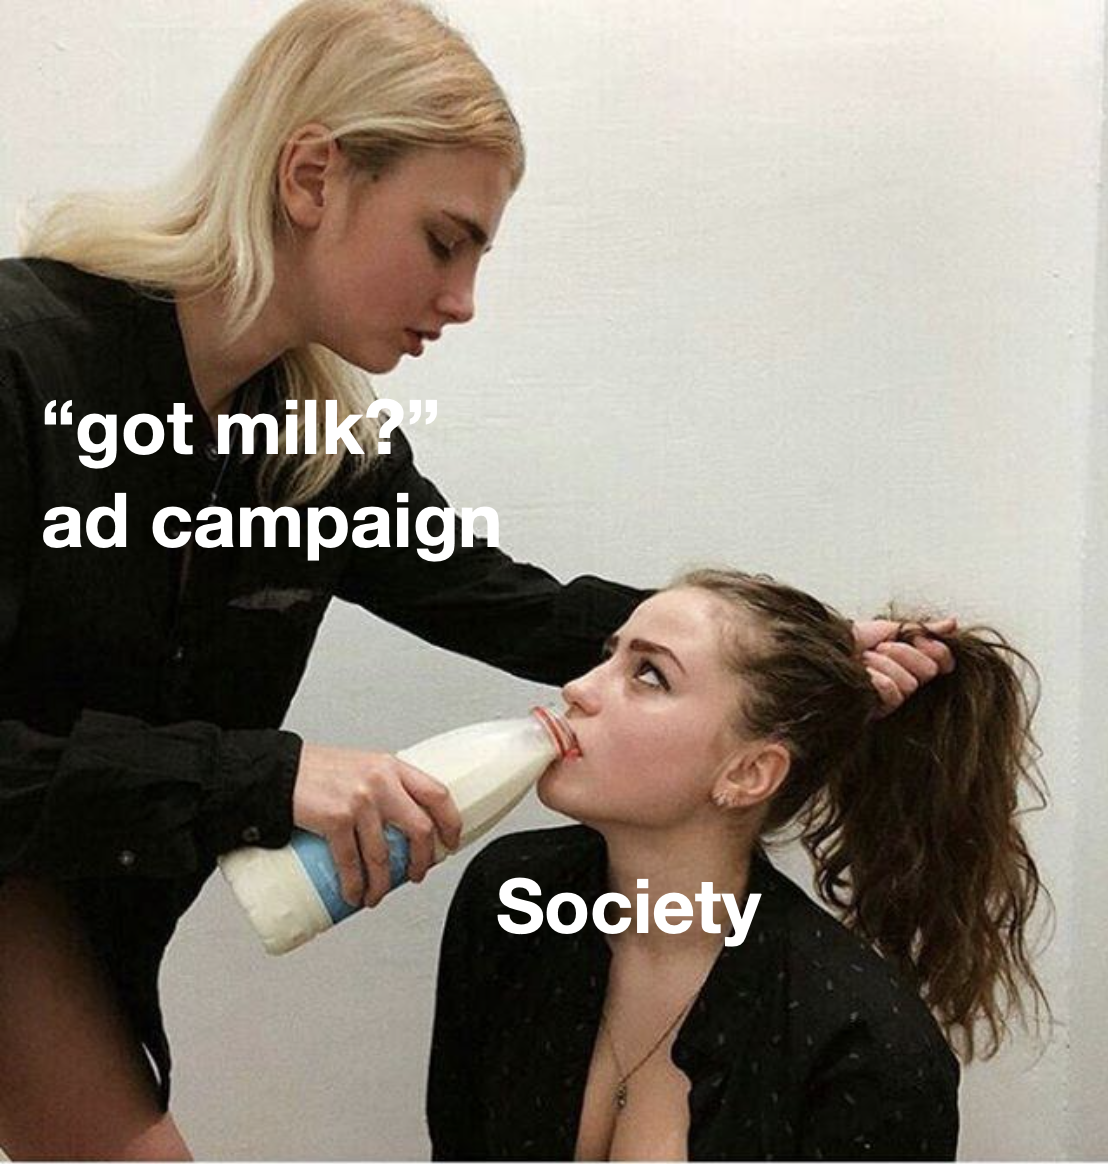 Drink more milk